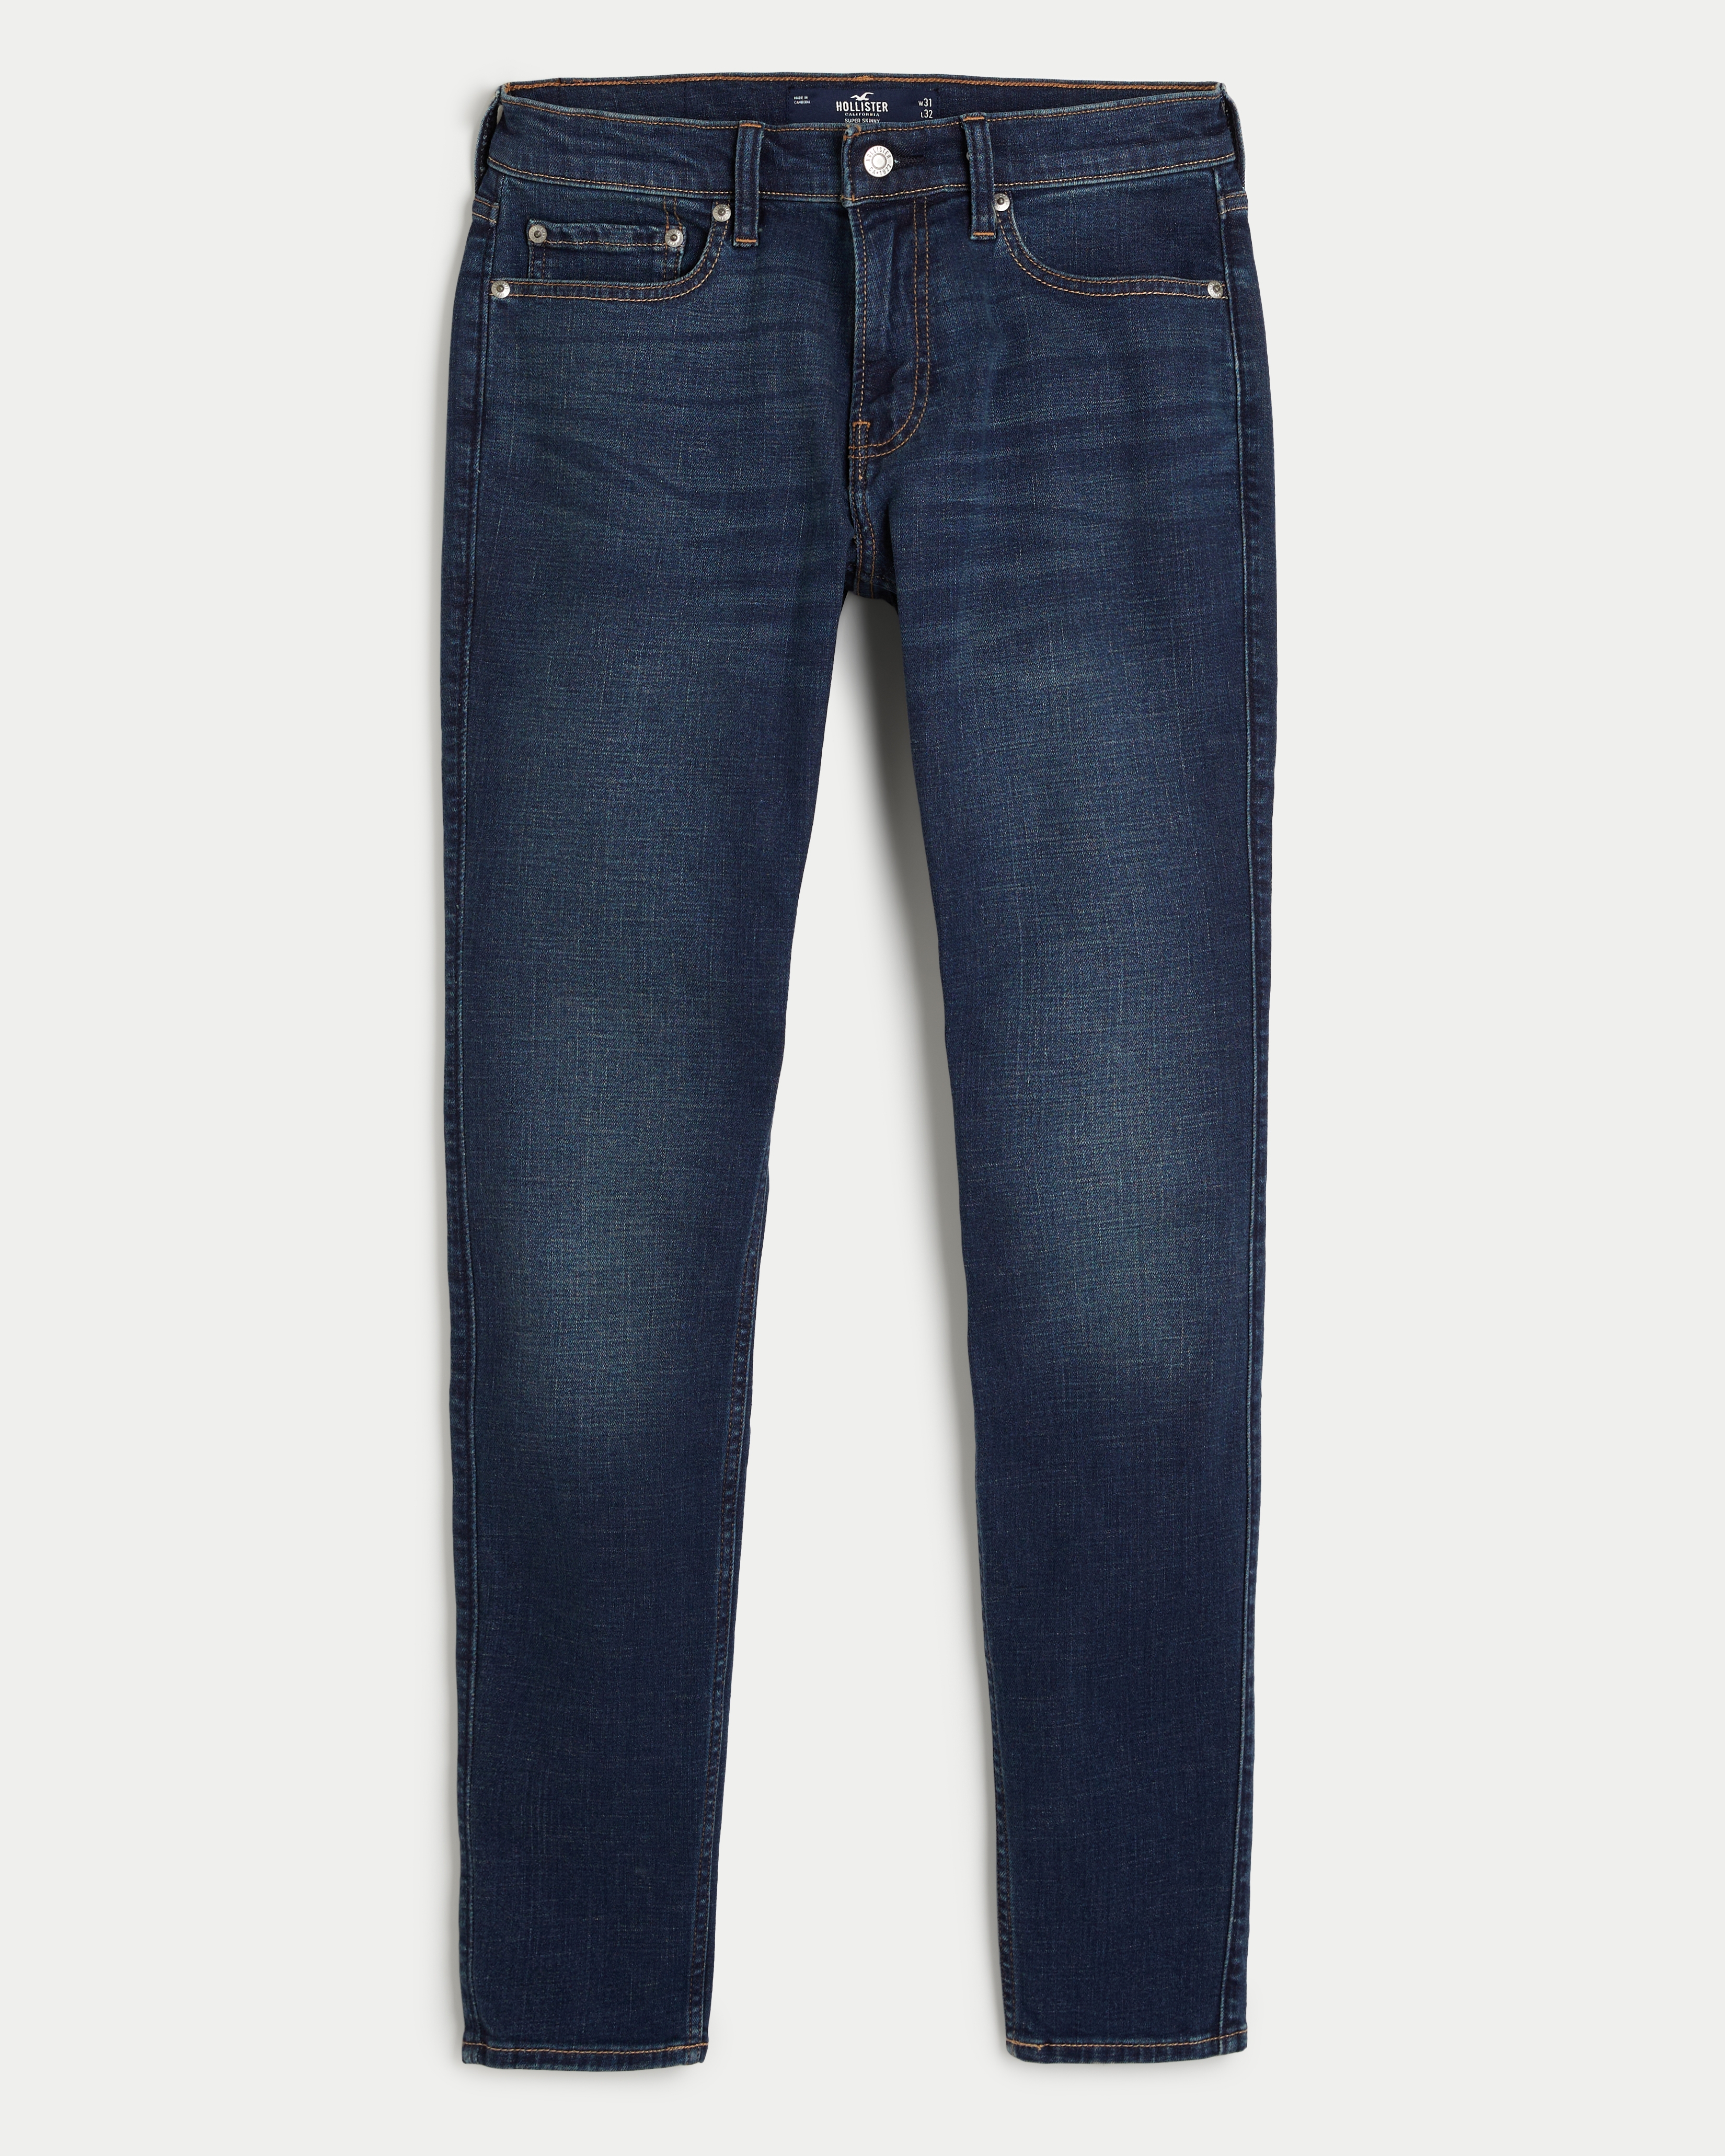 hollister jeans australia